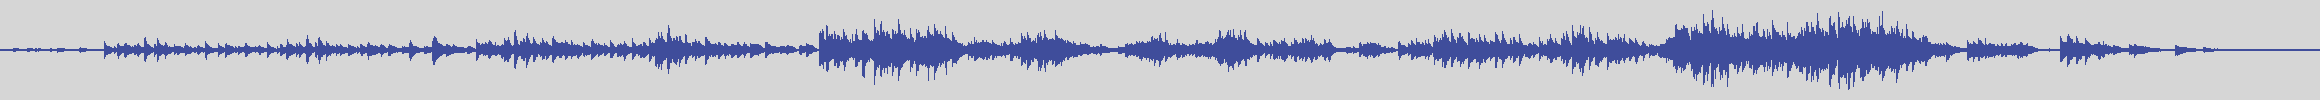 big_music_classic [BMC012]  -  [] audio wave form